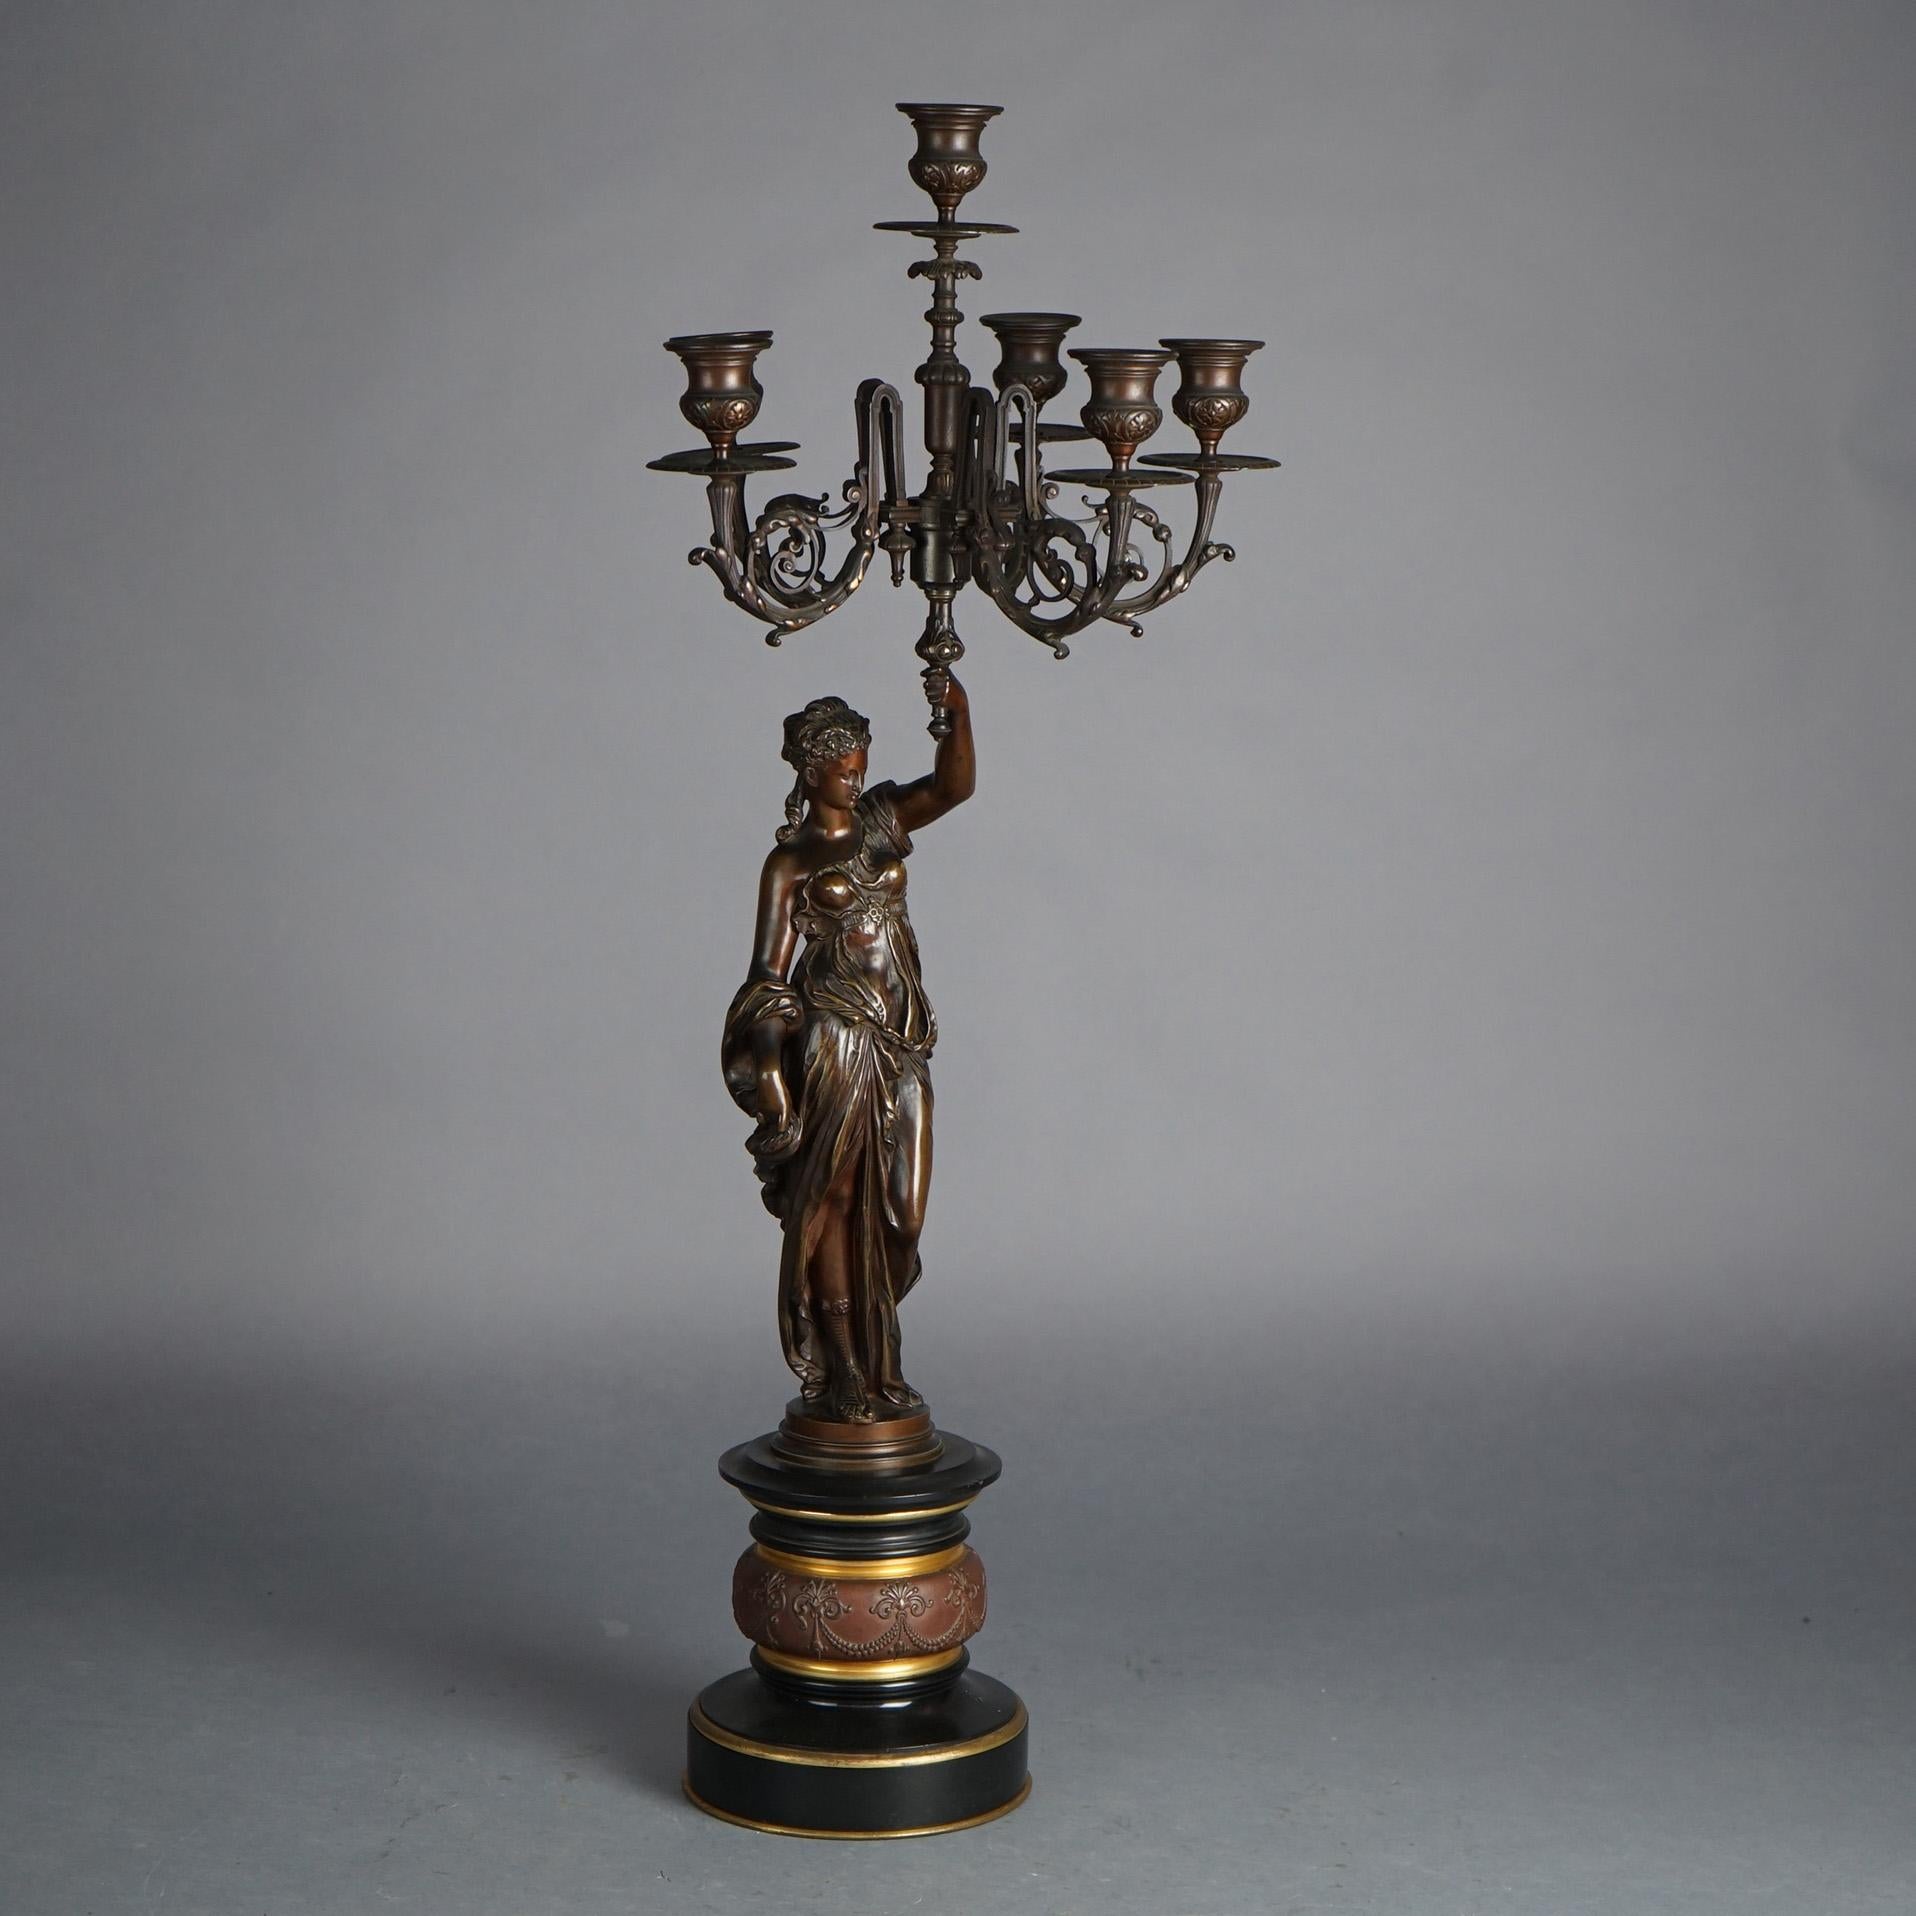 French Antique Renaissance Revival Figural Slate Clock & Bronzed Torchers Signed Dubois